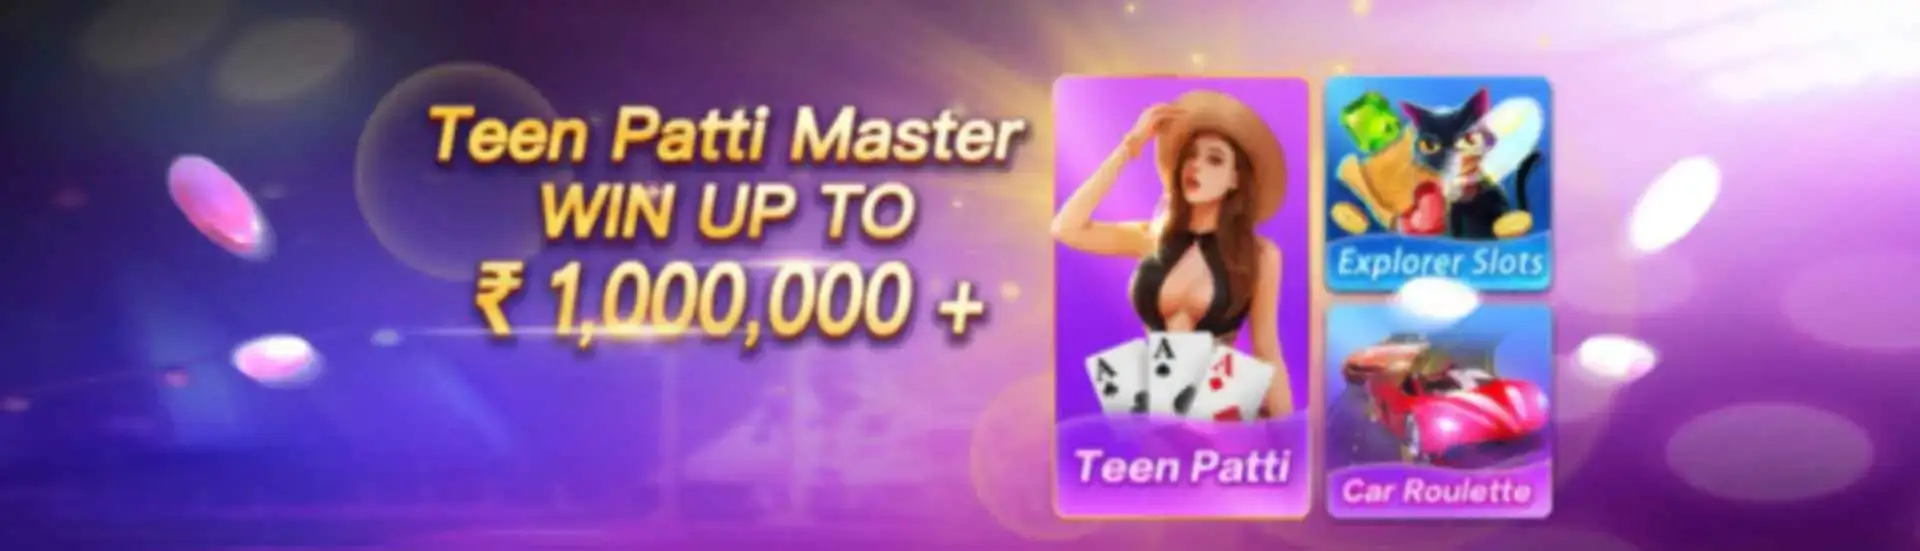 Teen Patti MasterWIN UP TOF 1.000,000 +